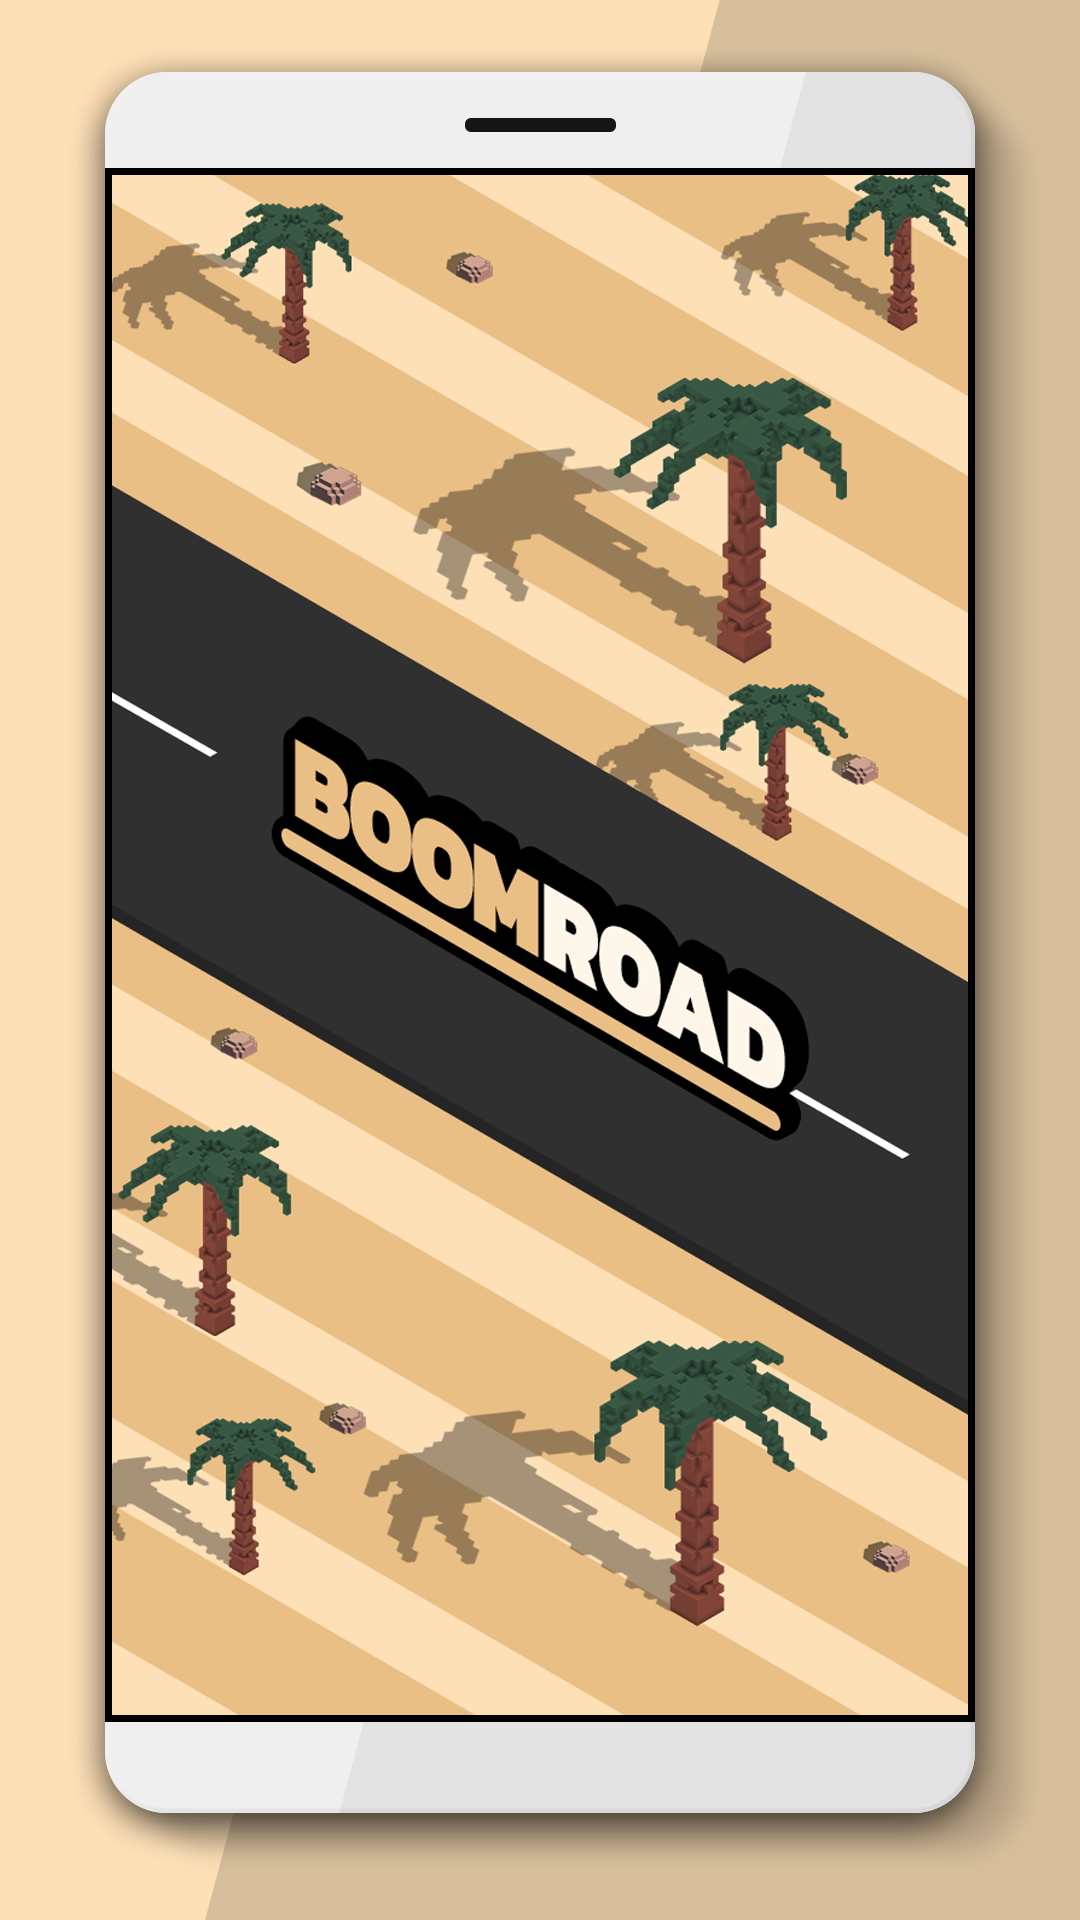 Screenshot 1 of Boom Road ကို 3d မောင်းပြီး ရိုက်ကူးခဲ့ပါတယ်။ 2.01